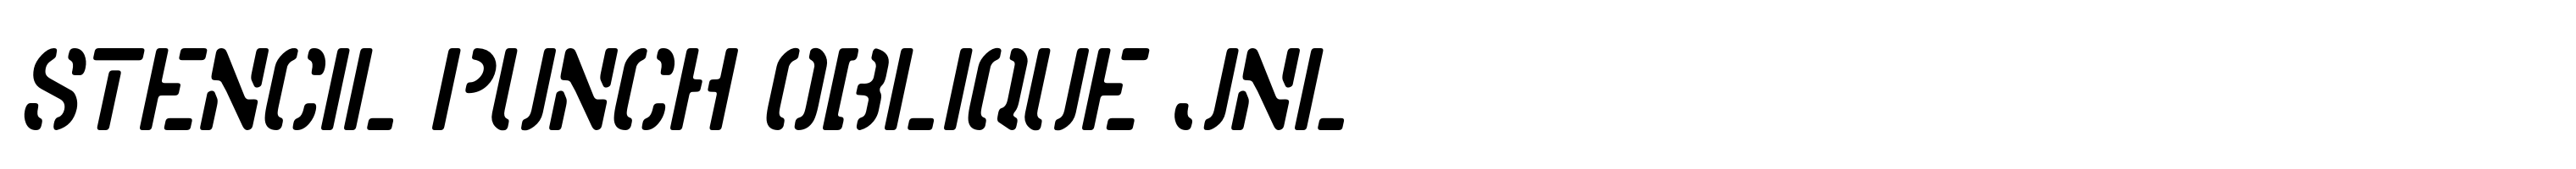 Stencil Punch Oblique JNL